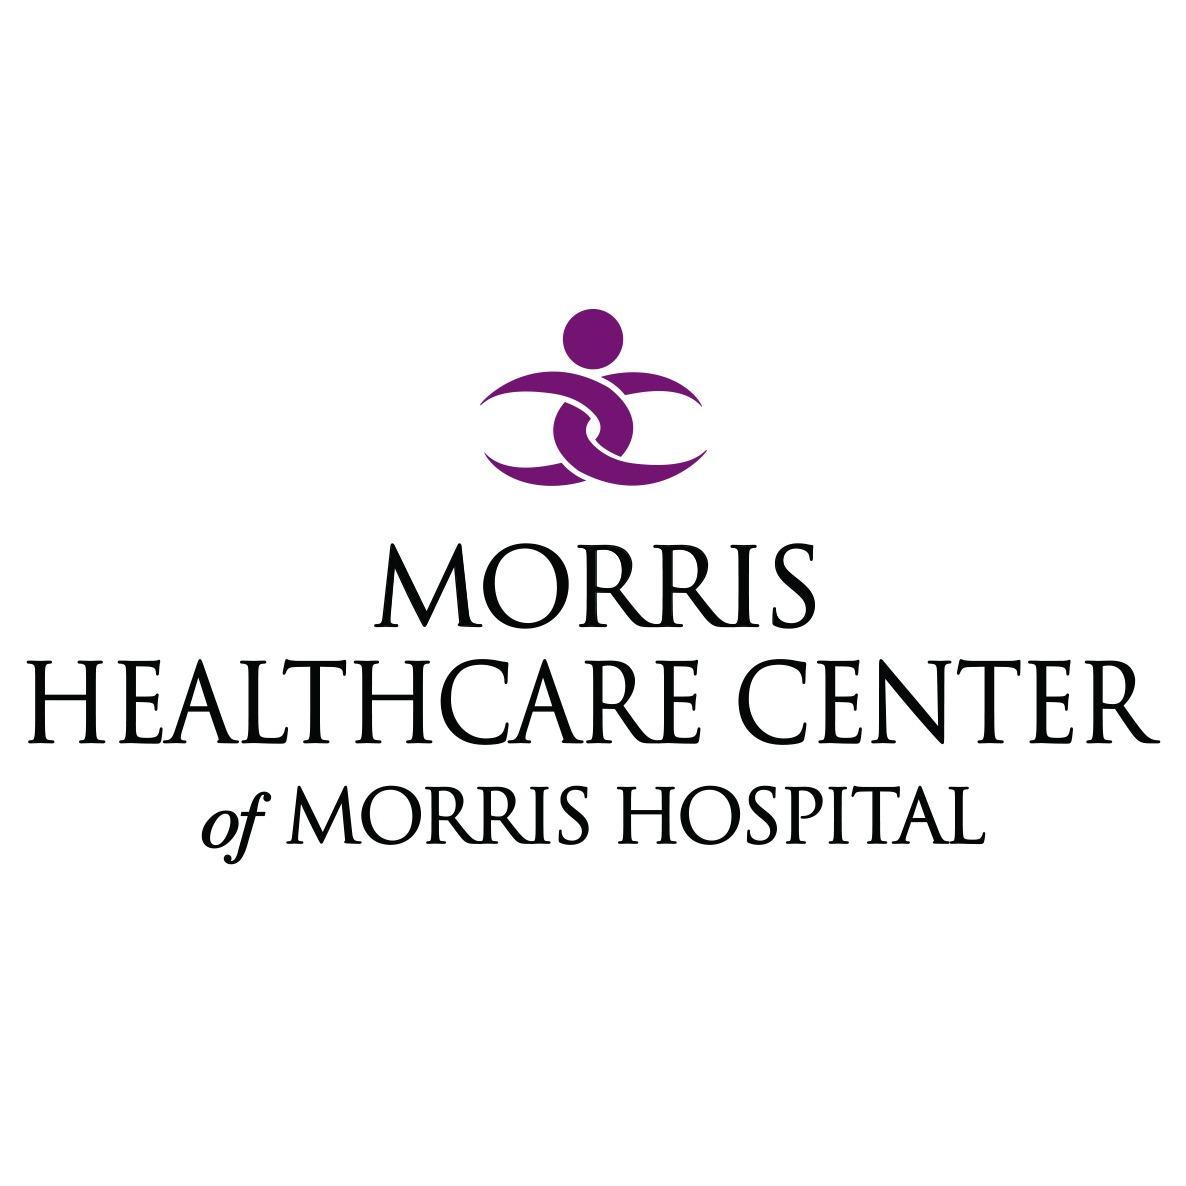 Morris Healthcare Center of Morris Hospital - W. Route 6 Morris (815)942-5474